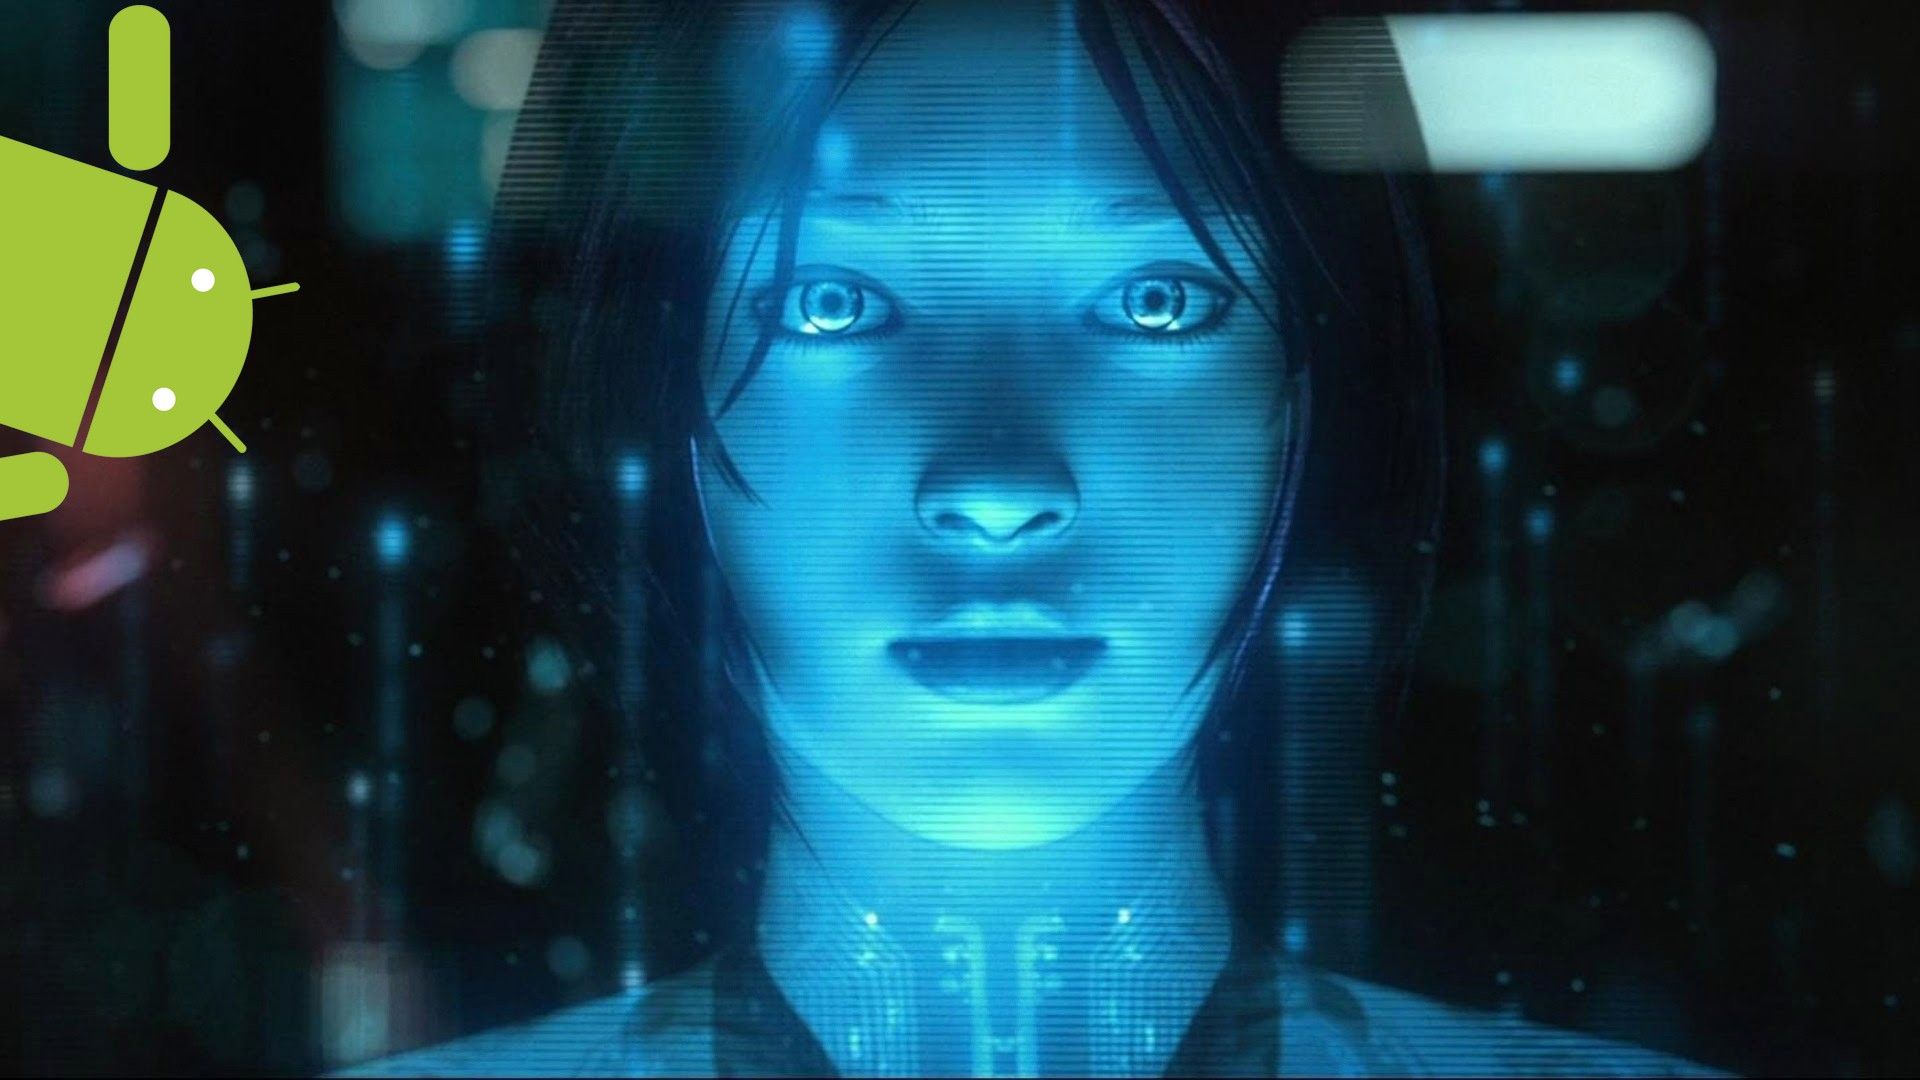 Cortana ผู้ช่วยปัญญาประดิษฐ์จะสามารถใช้ได้จาก lock screen ของแอนดรอยด์เร็วๆนี้